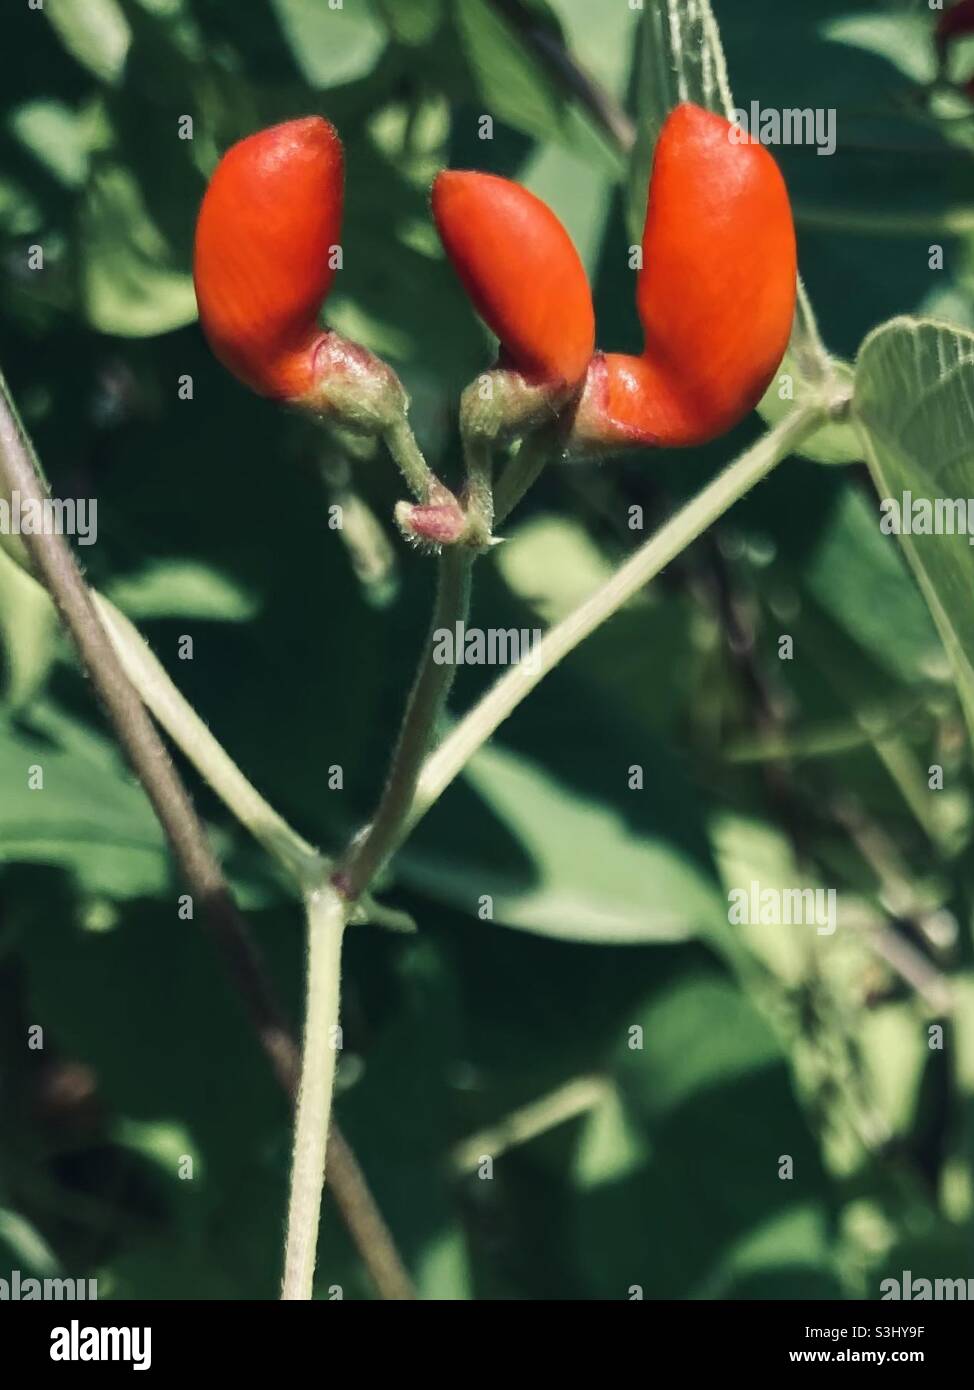 Red flower buds of bean plant in vegetable garden Stock Photo